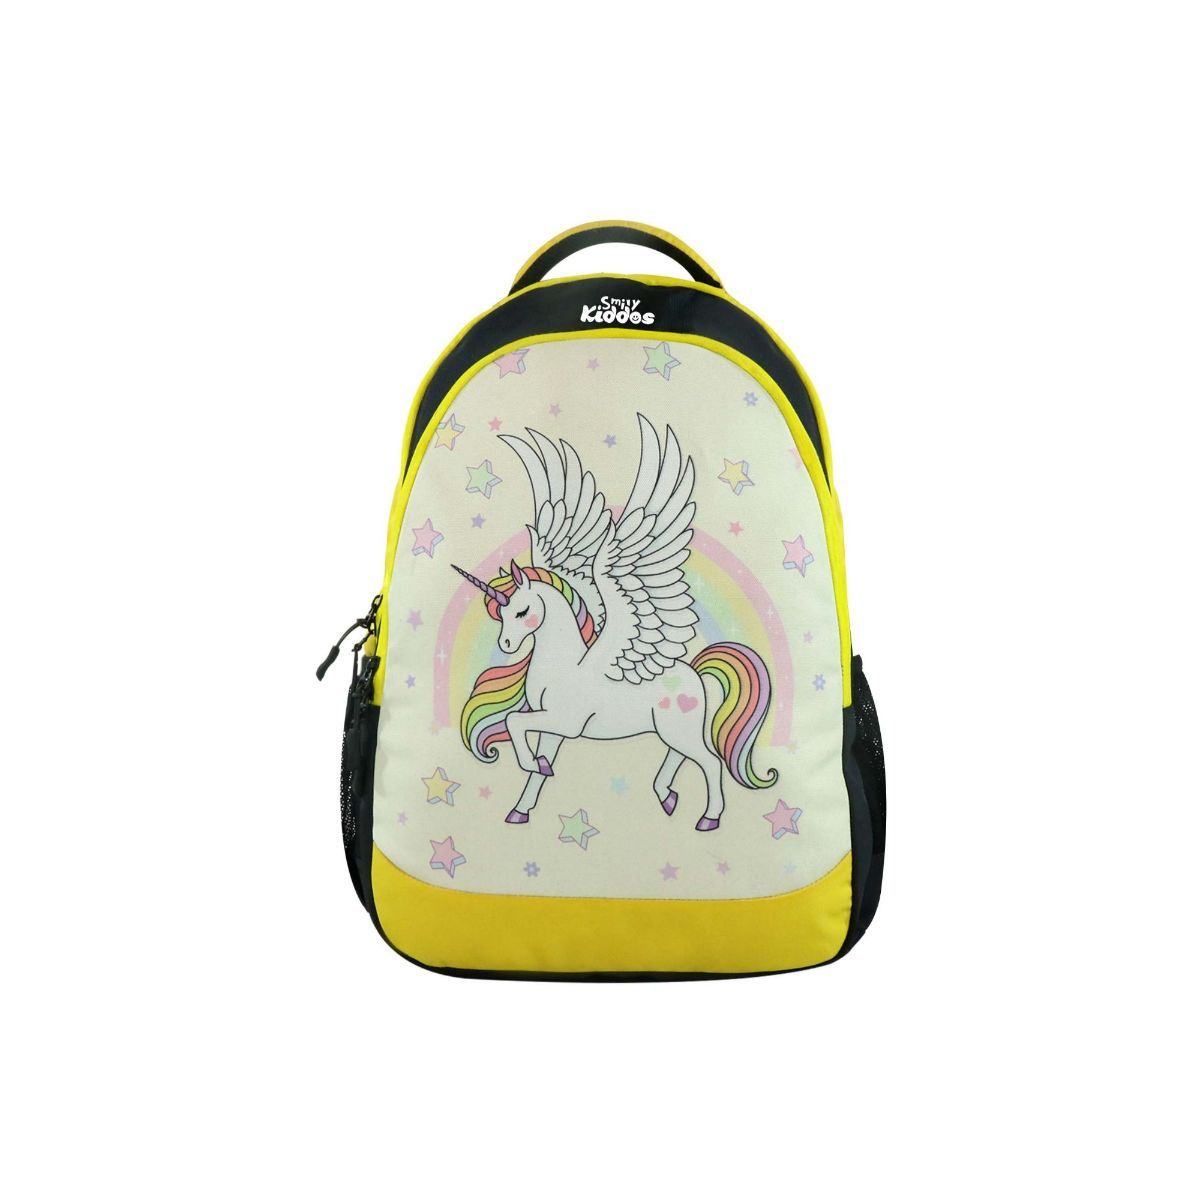 Share more than 79 unicorn bag online best